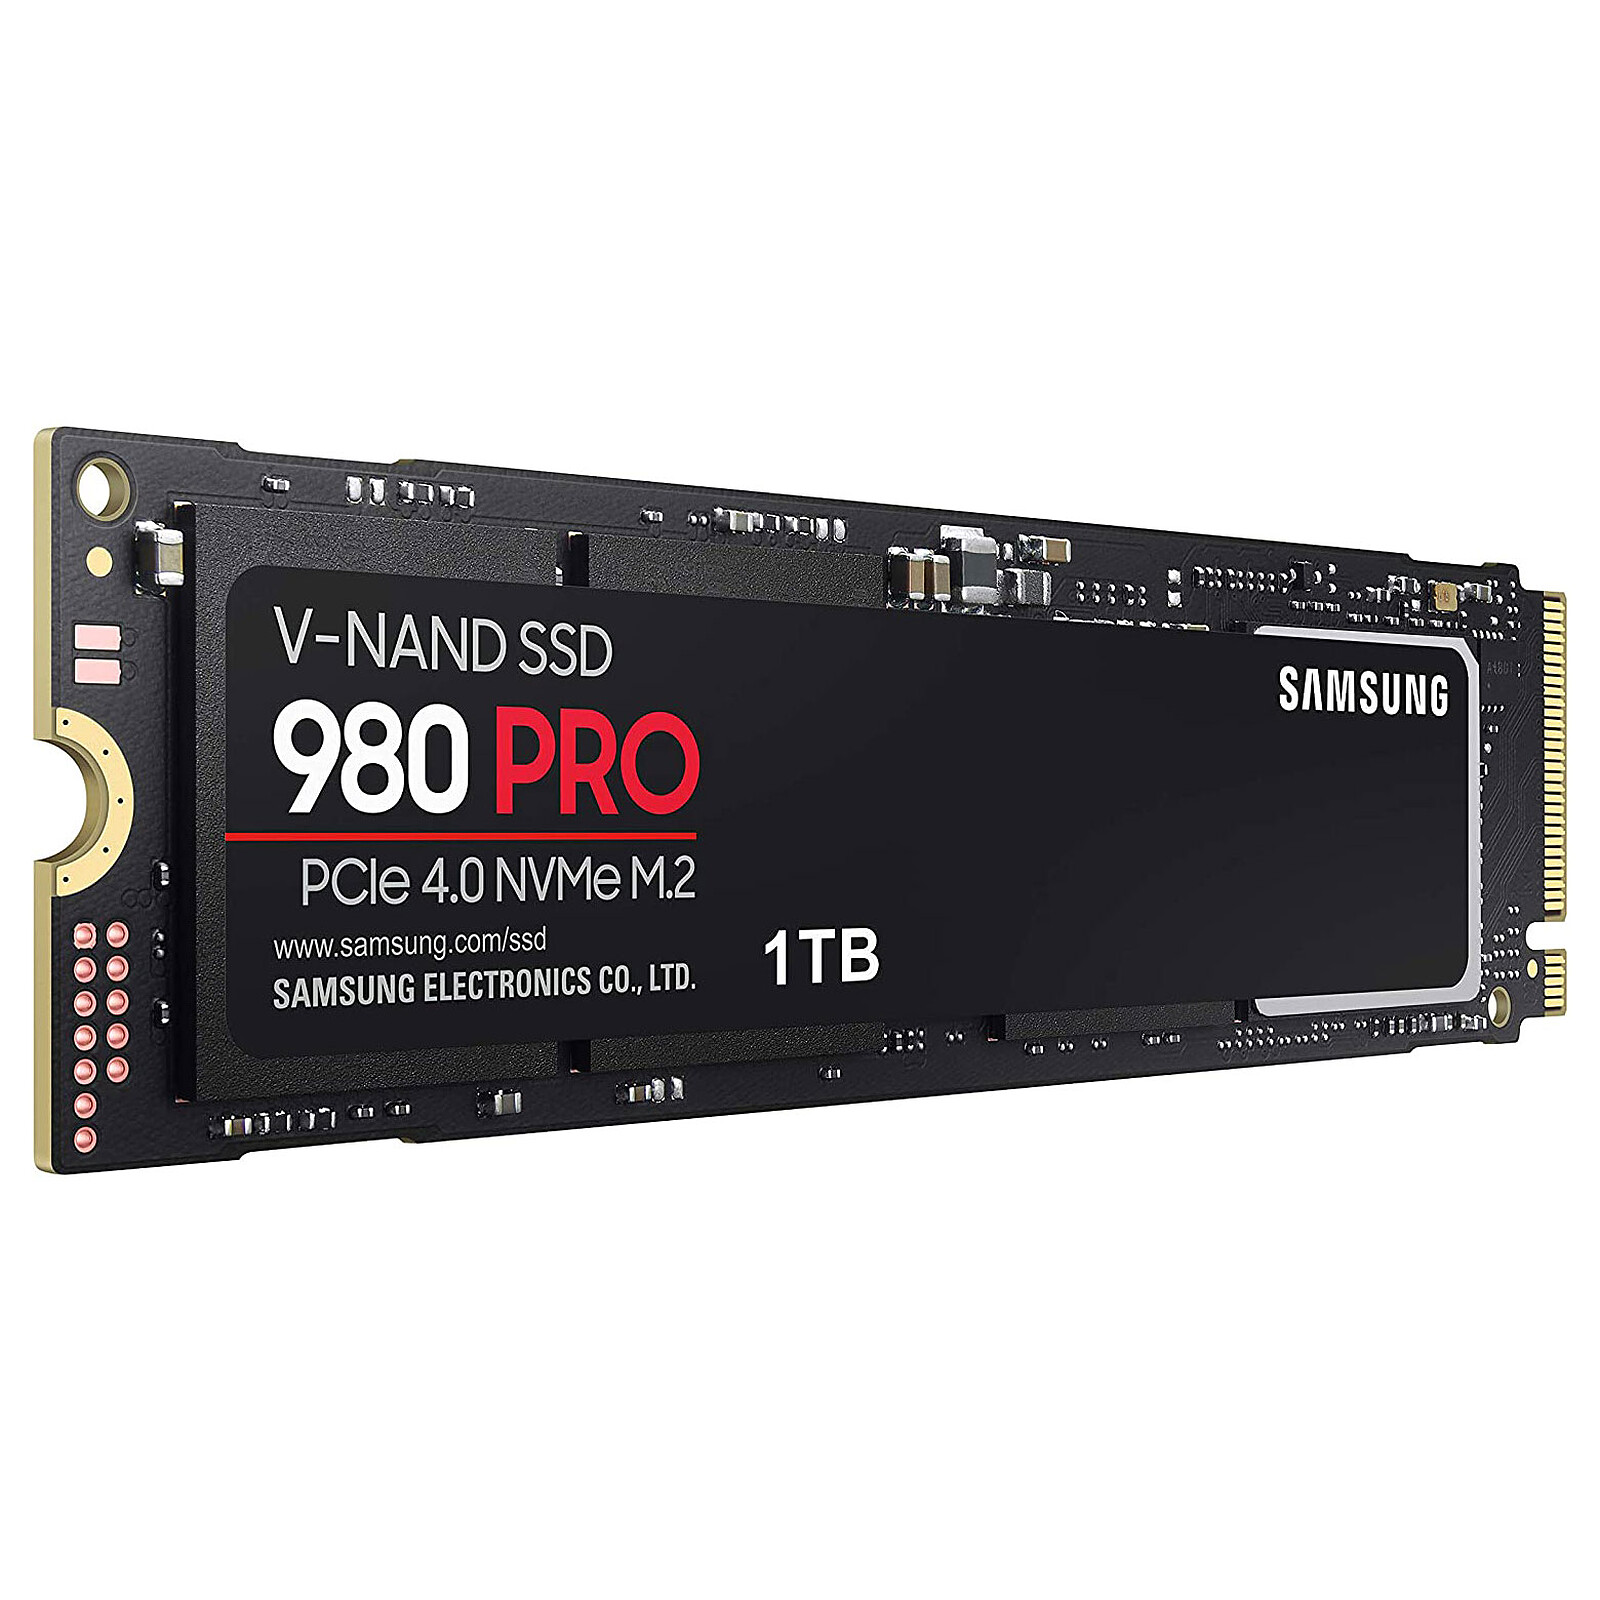 Samsung SSD 980 PRO M.2 PCIe NVMe 1TB - SSD - LDLC 3-year warranty